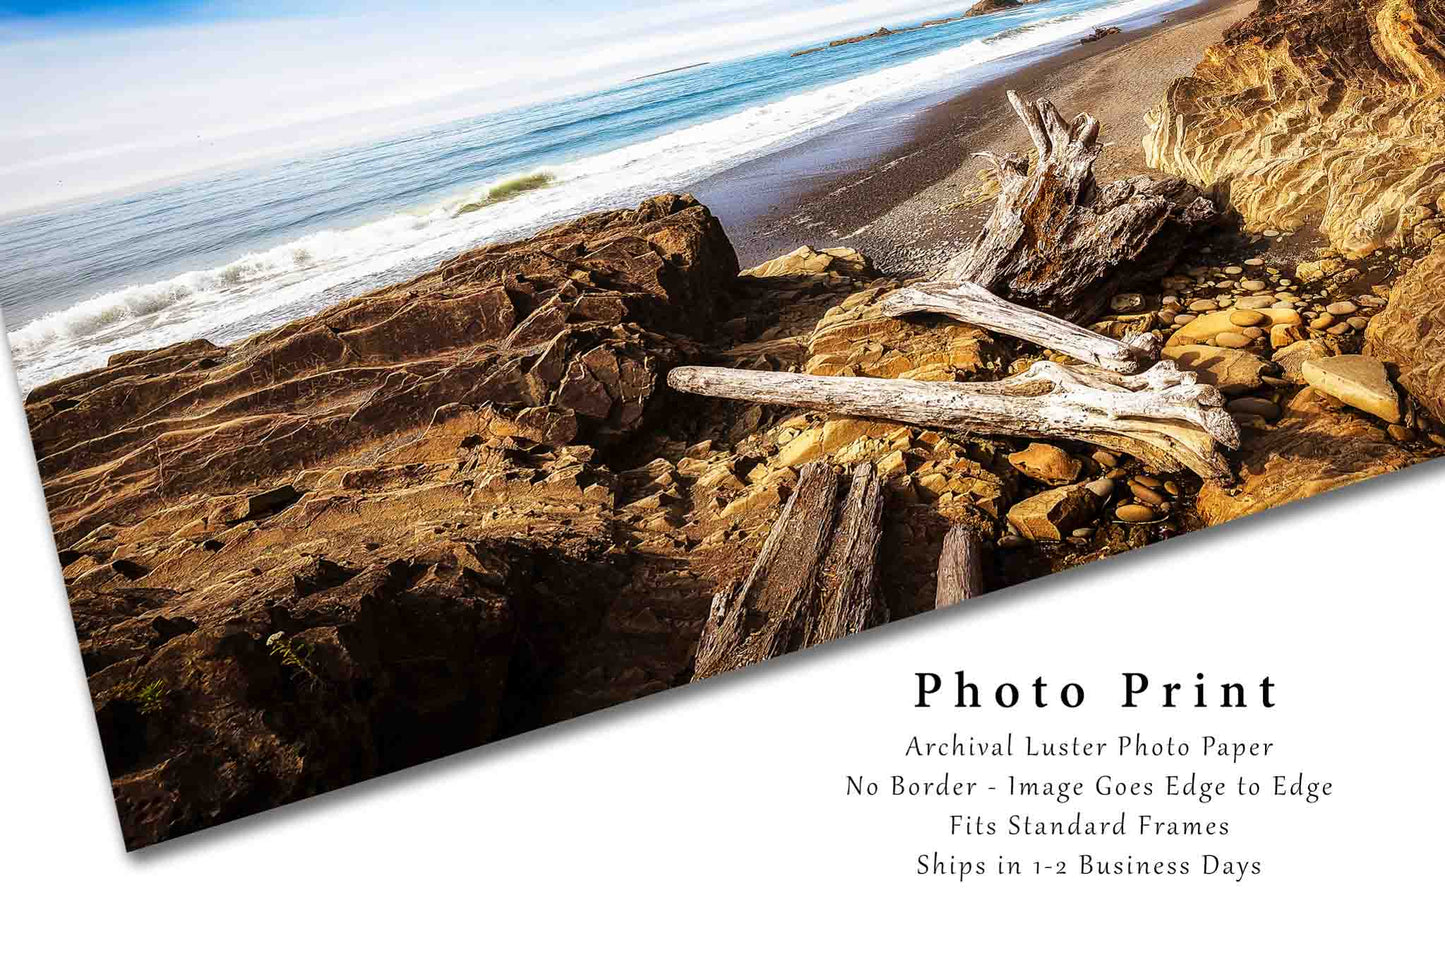 Pacific Northwest Art Print - Fine Art Photography Print of Log Remnants on Beach Along Coast in Washington State Coastal Wall Art Beach Art